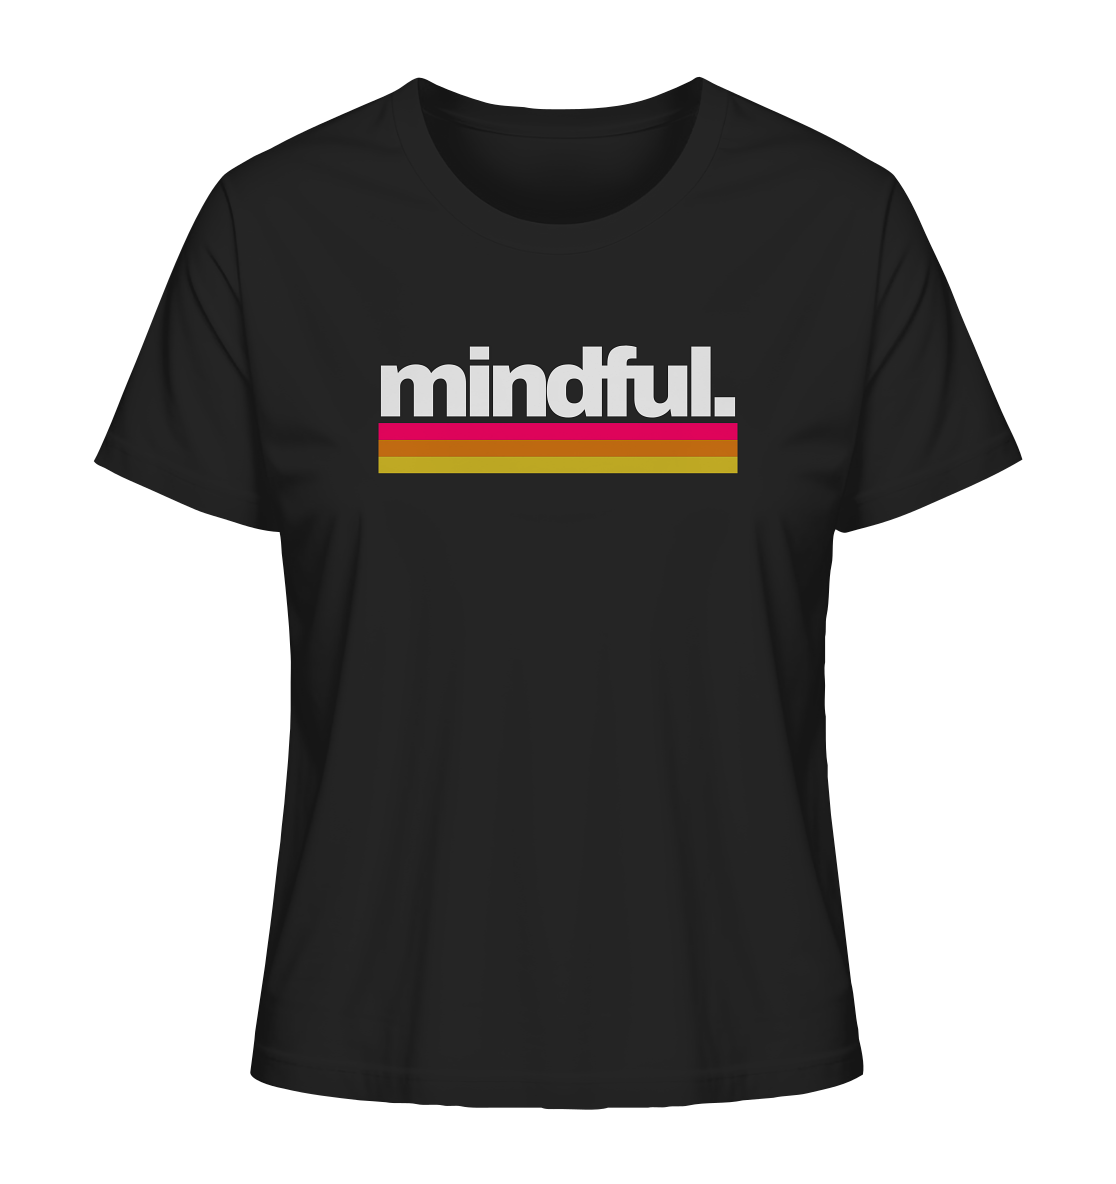 Mindful. 2.0 | Premium Organic Ladies T-Shirt